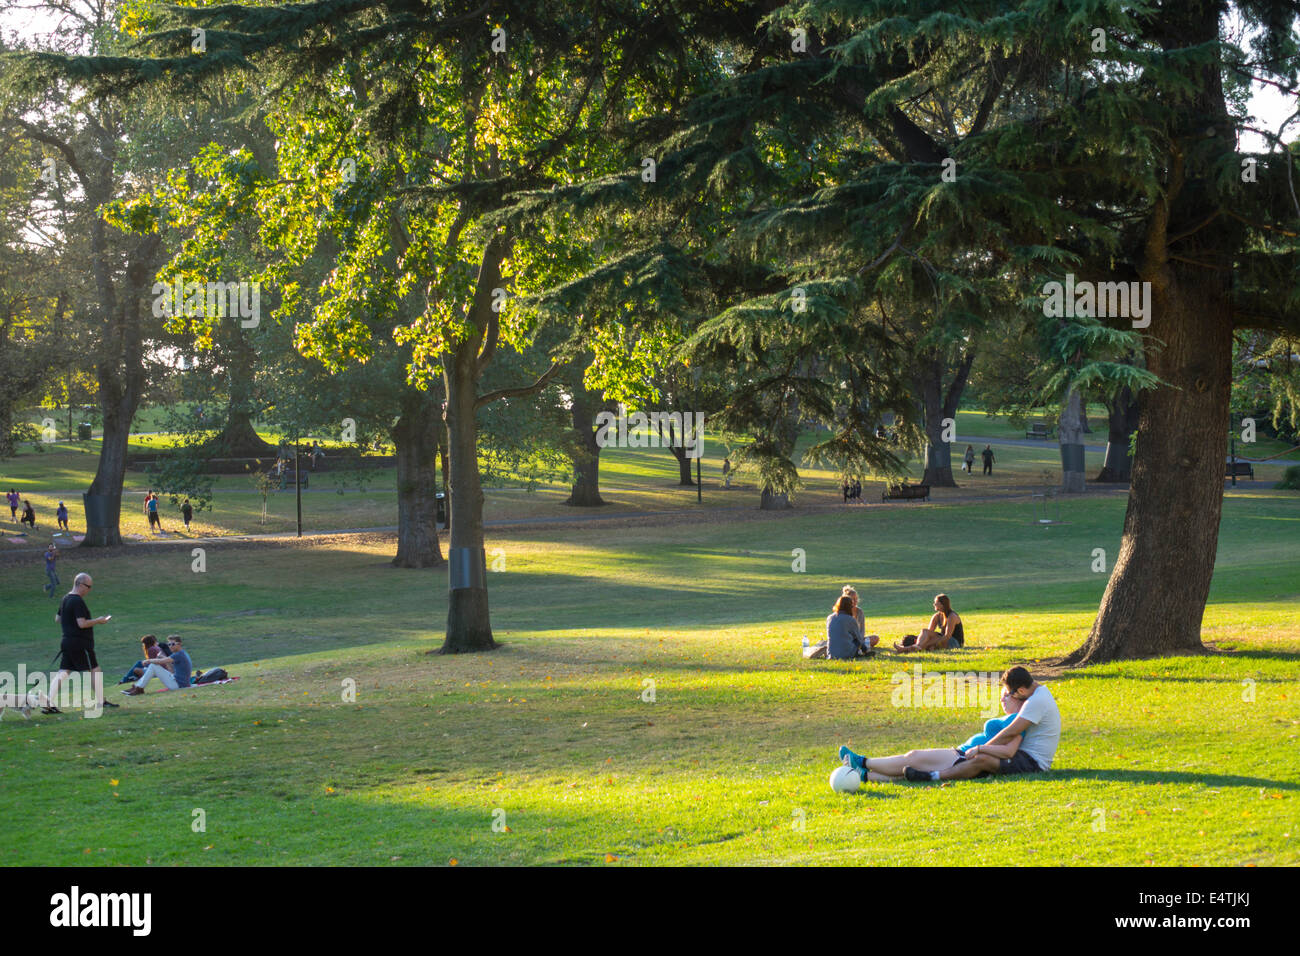 Australia,Victoria,West Melbourne,Flagstaff Gardens,public park,lawn,grass,trees,residents,relaxing,AU140319180 Stock Photo